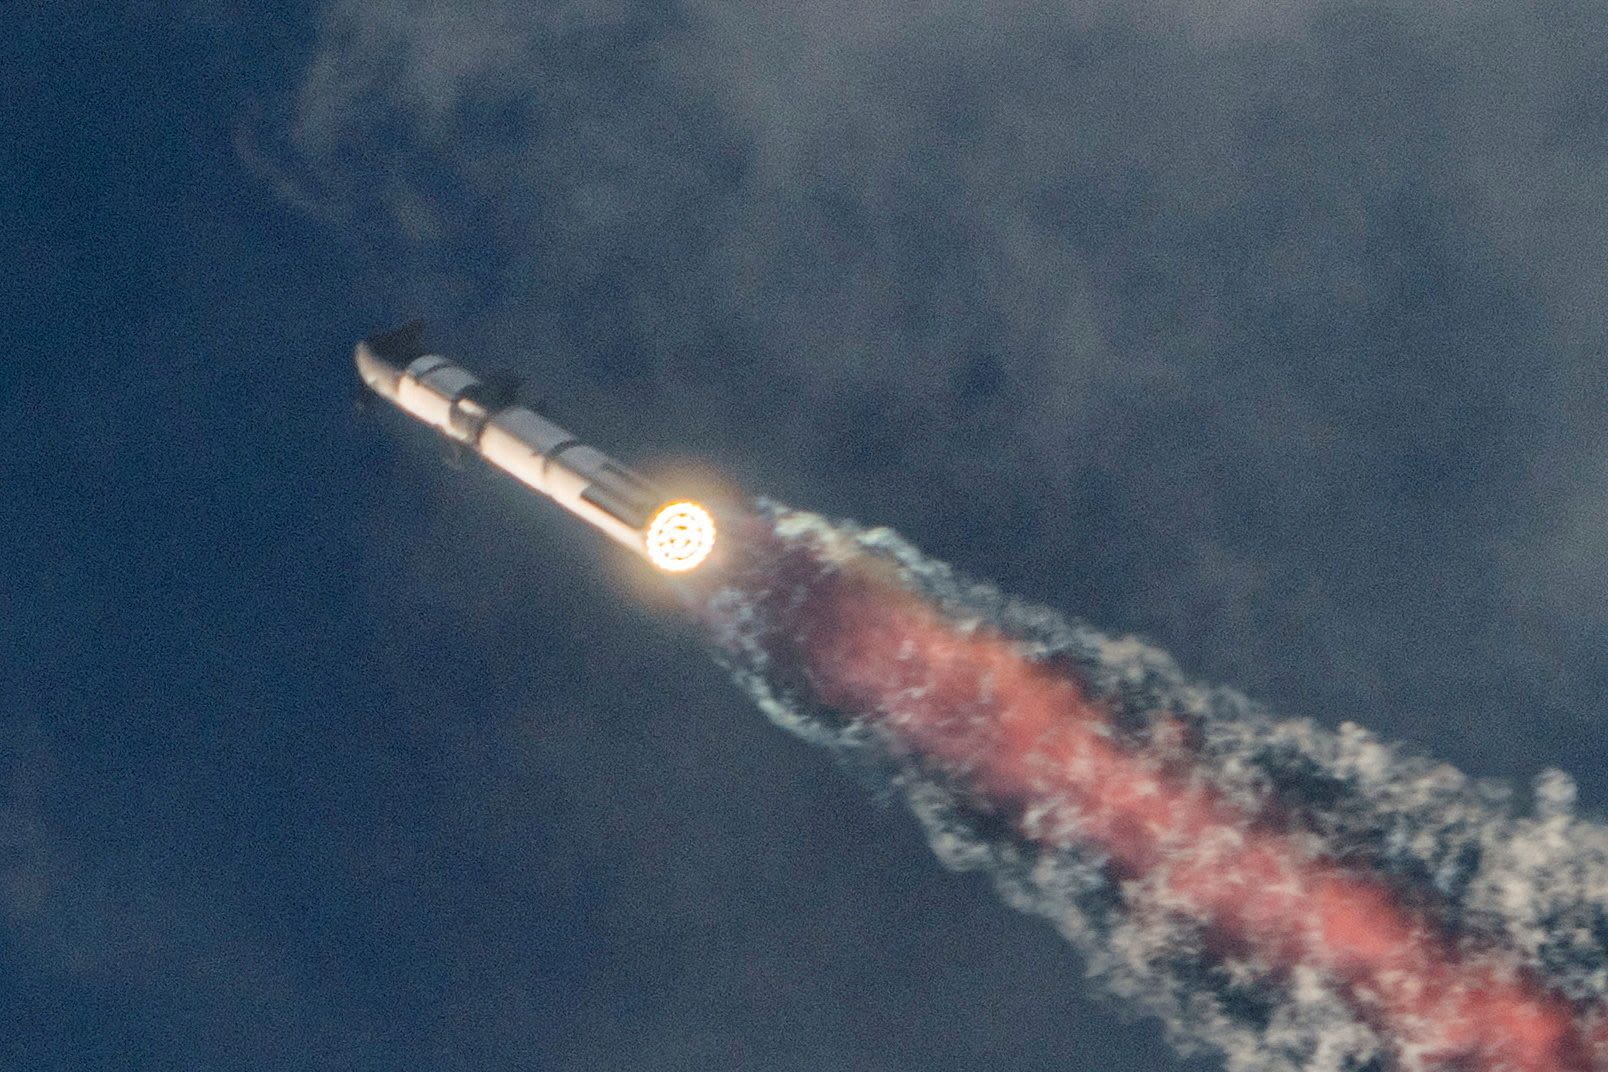 SpaceX Starship makes first splashdown, a major milestone for Elon Musk's megarocket